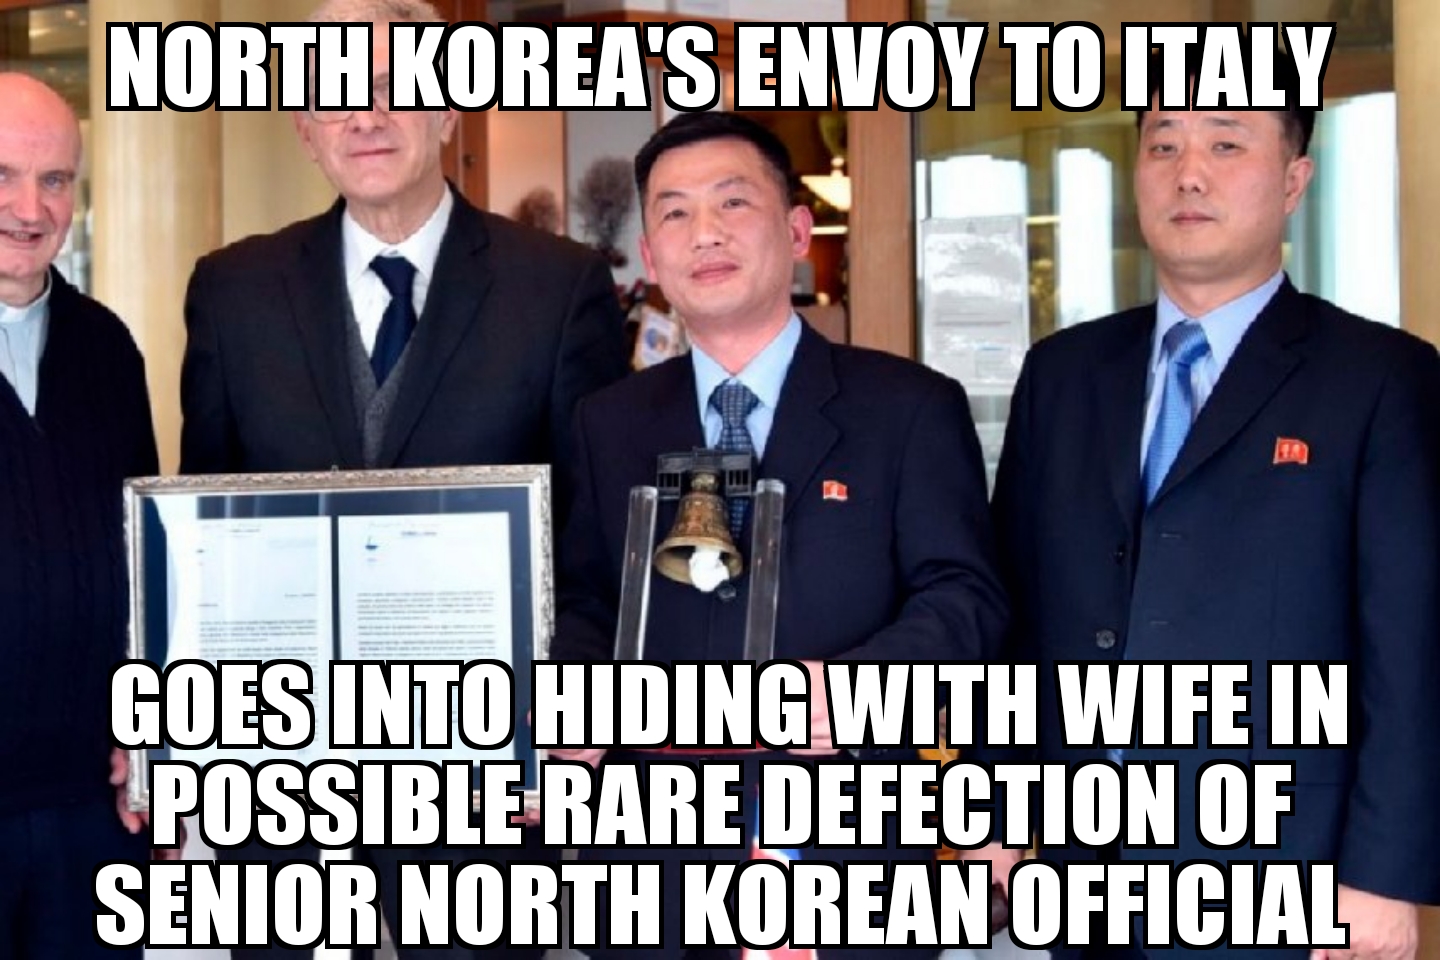 North Korea envoy to Italy in possible defection